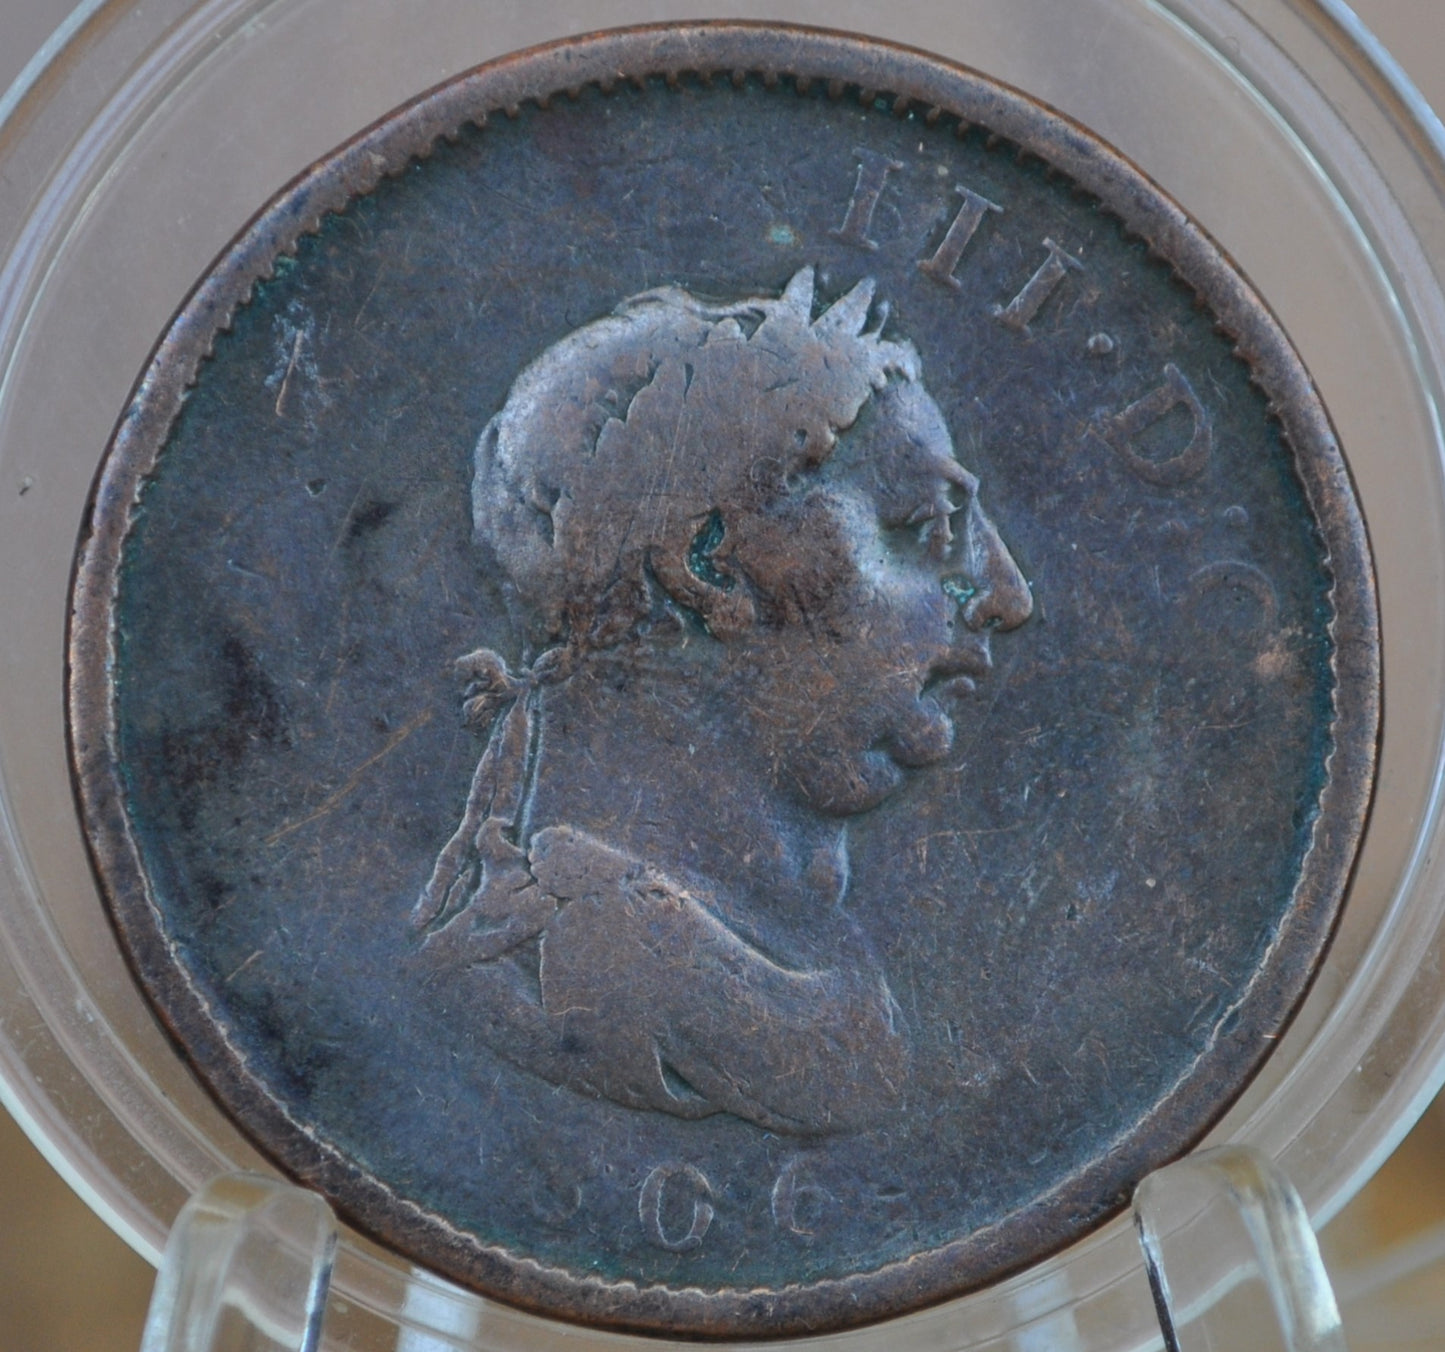 1806 Great Britain One Penny - Worn - UK 1 Penny 1806 - George III